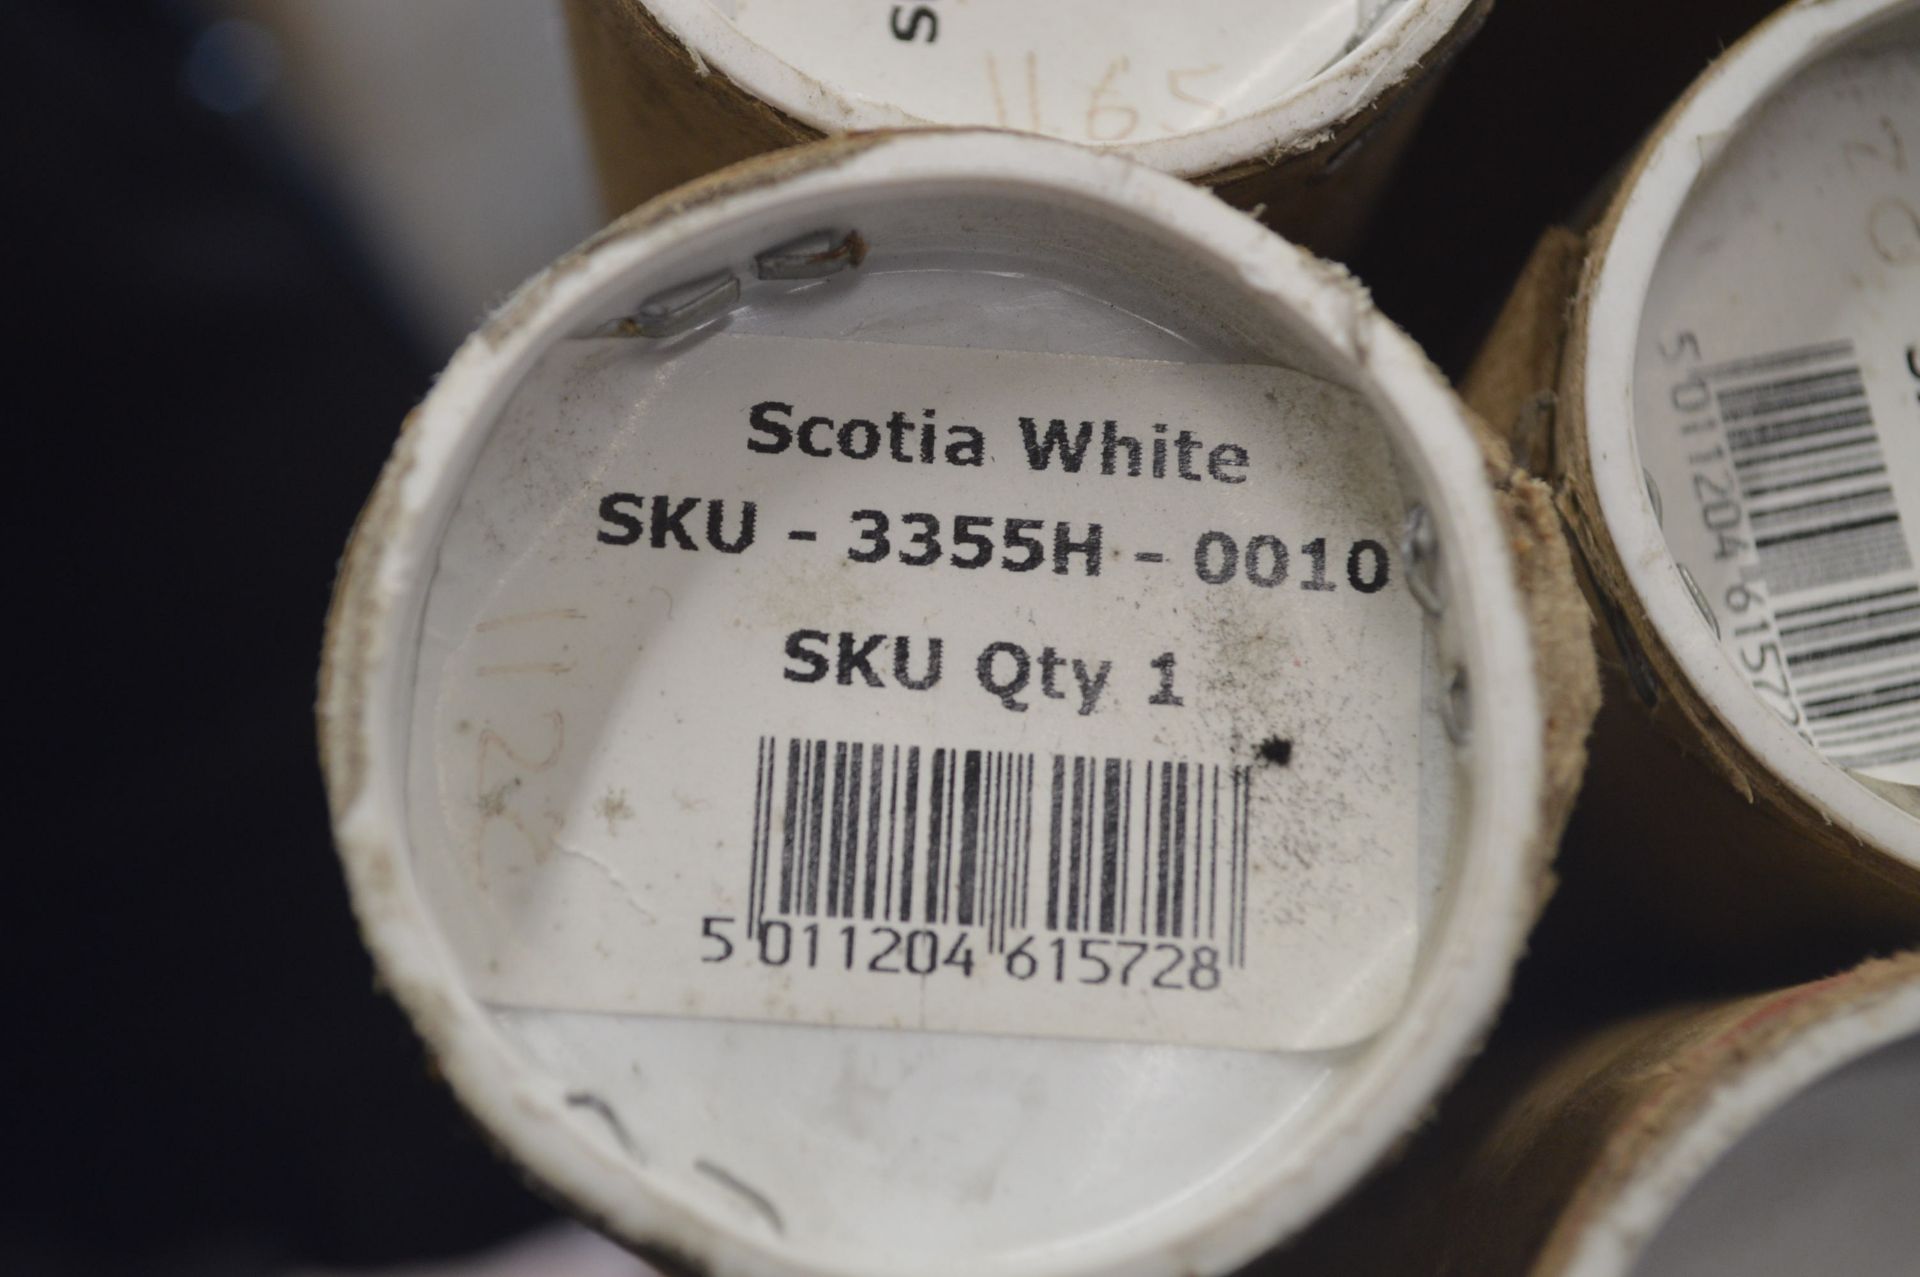 Five Packs of White Scotia